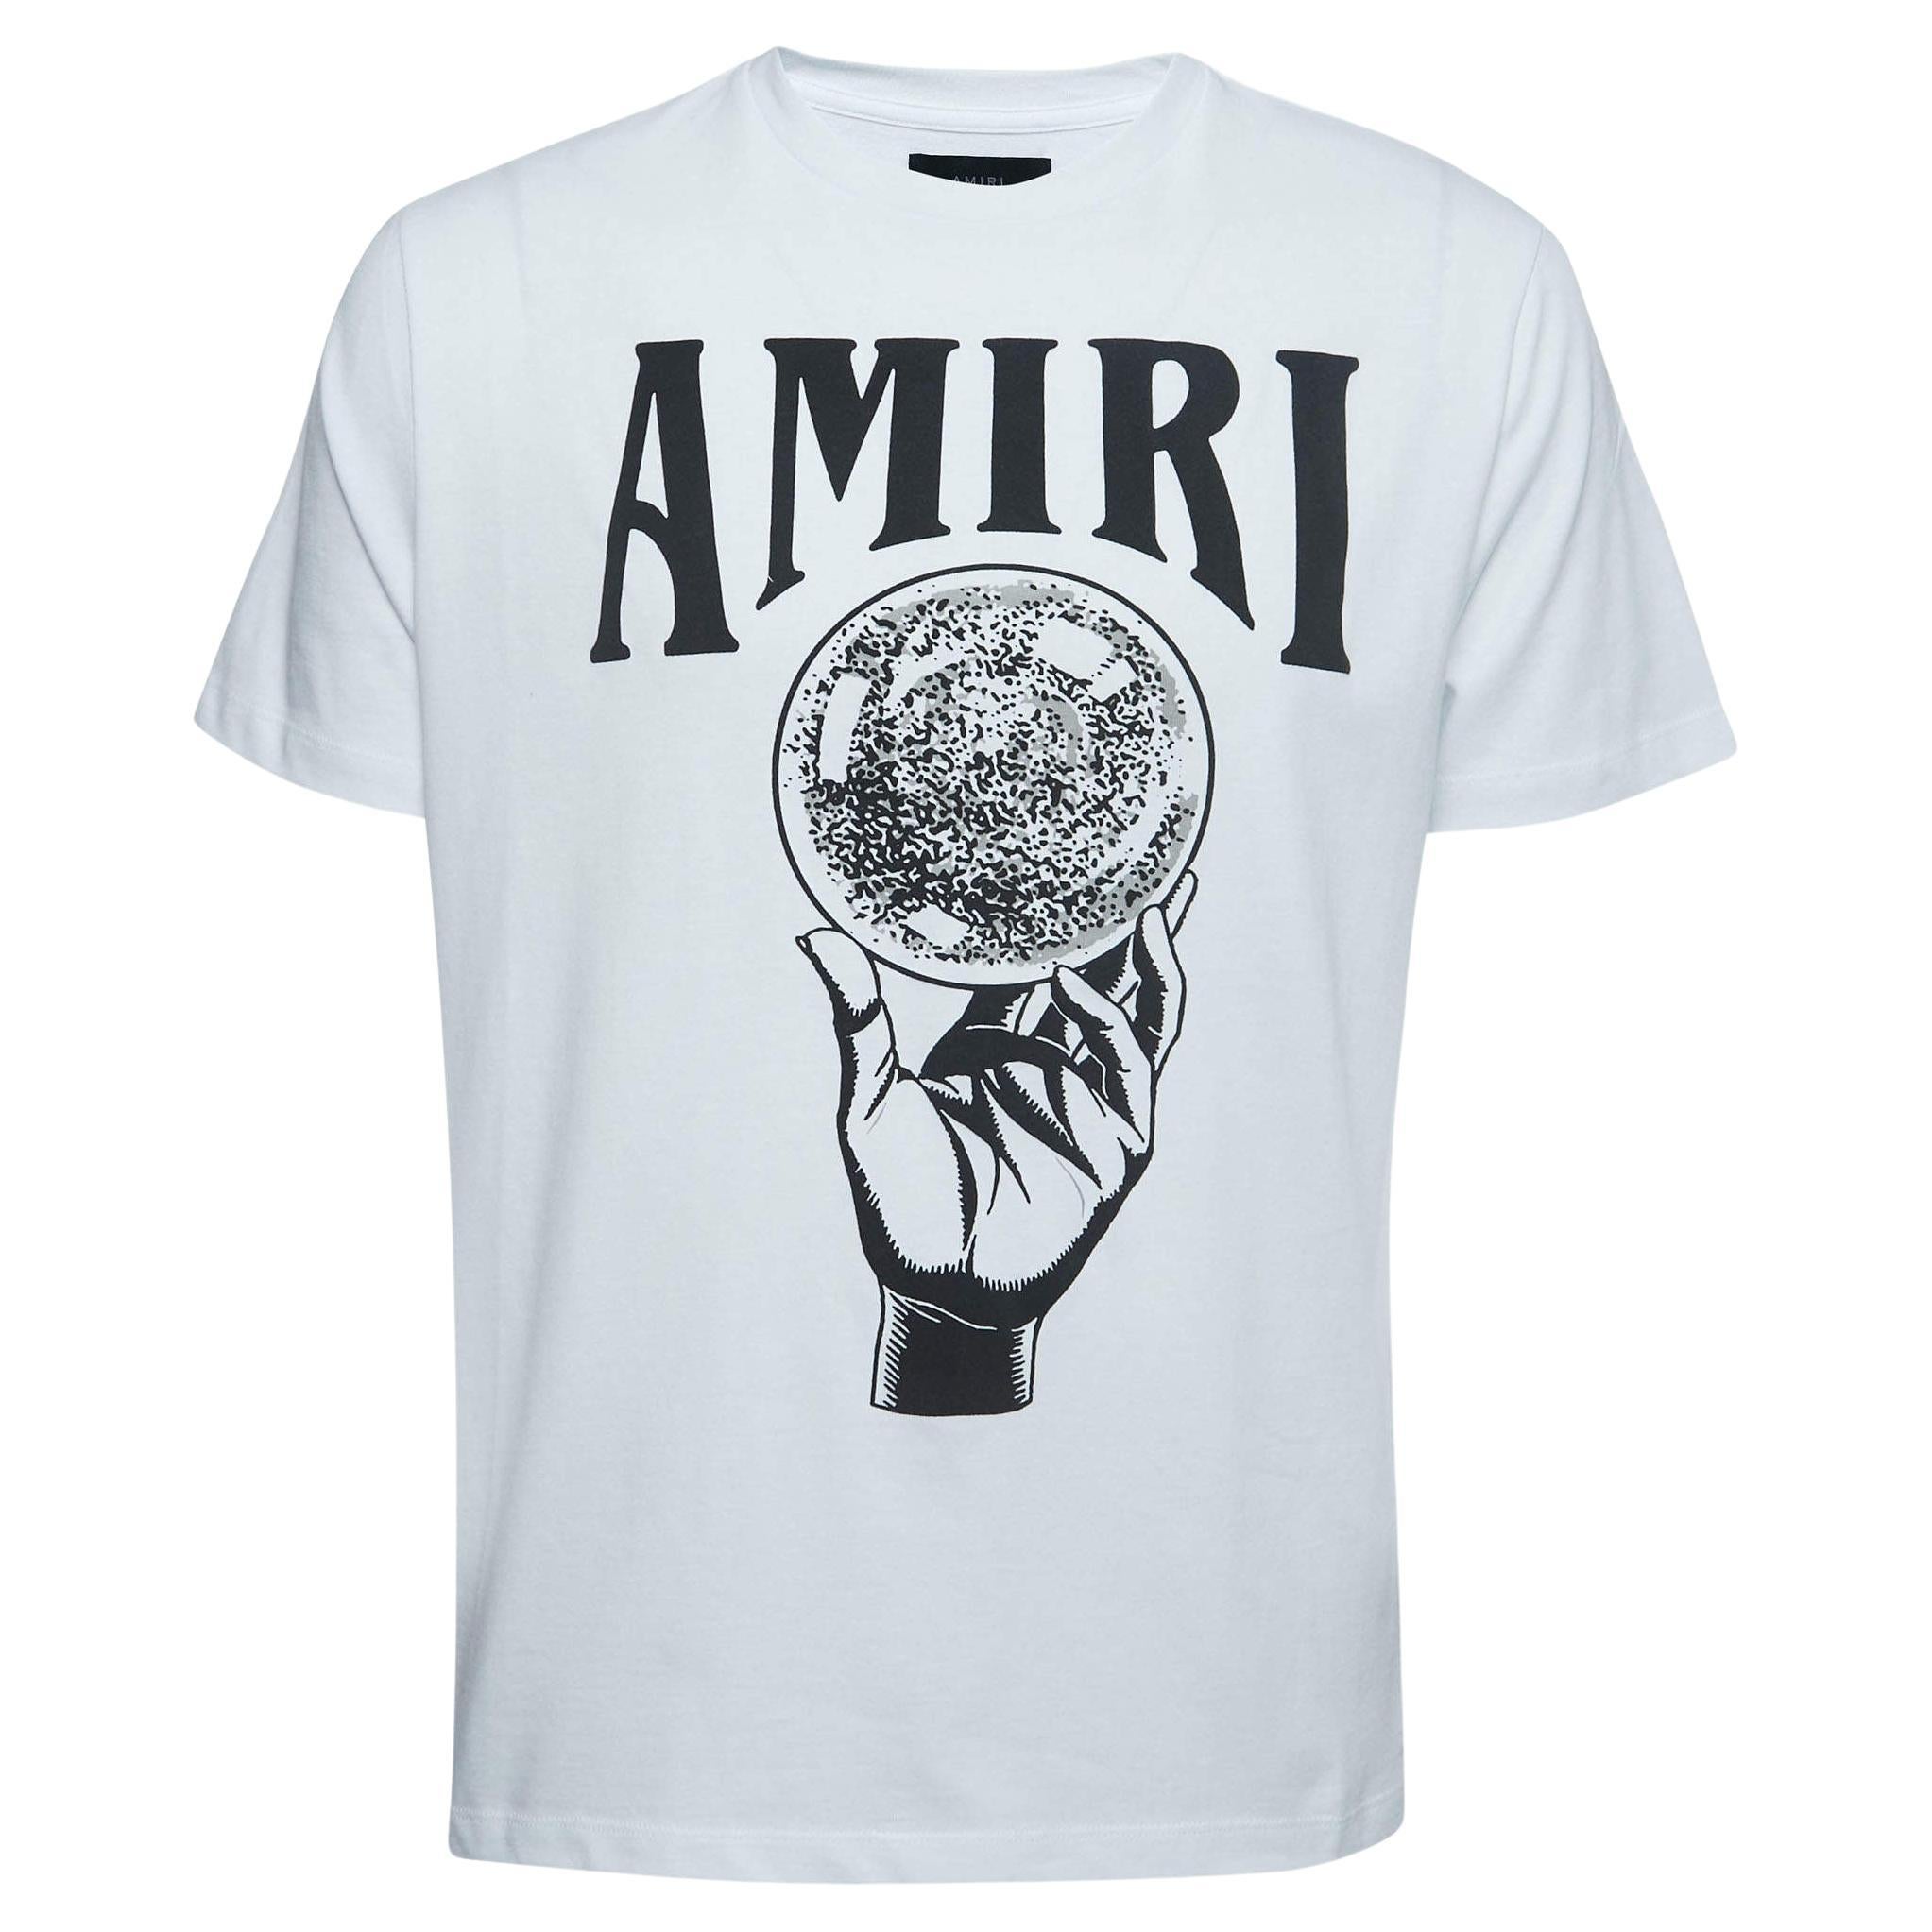 Amiri White Cotton Crystal Ball Print T-Shirt S S. en vente